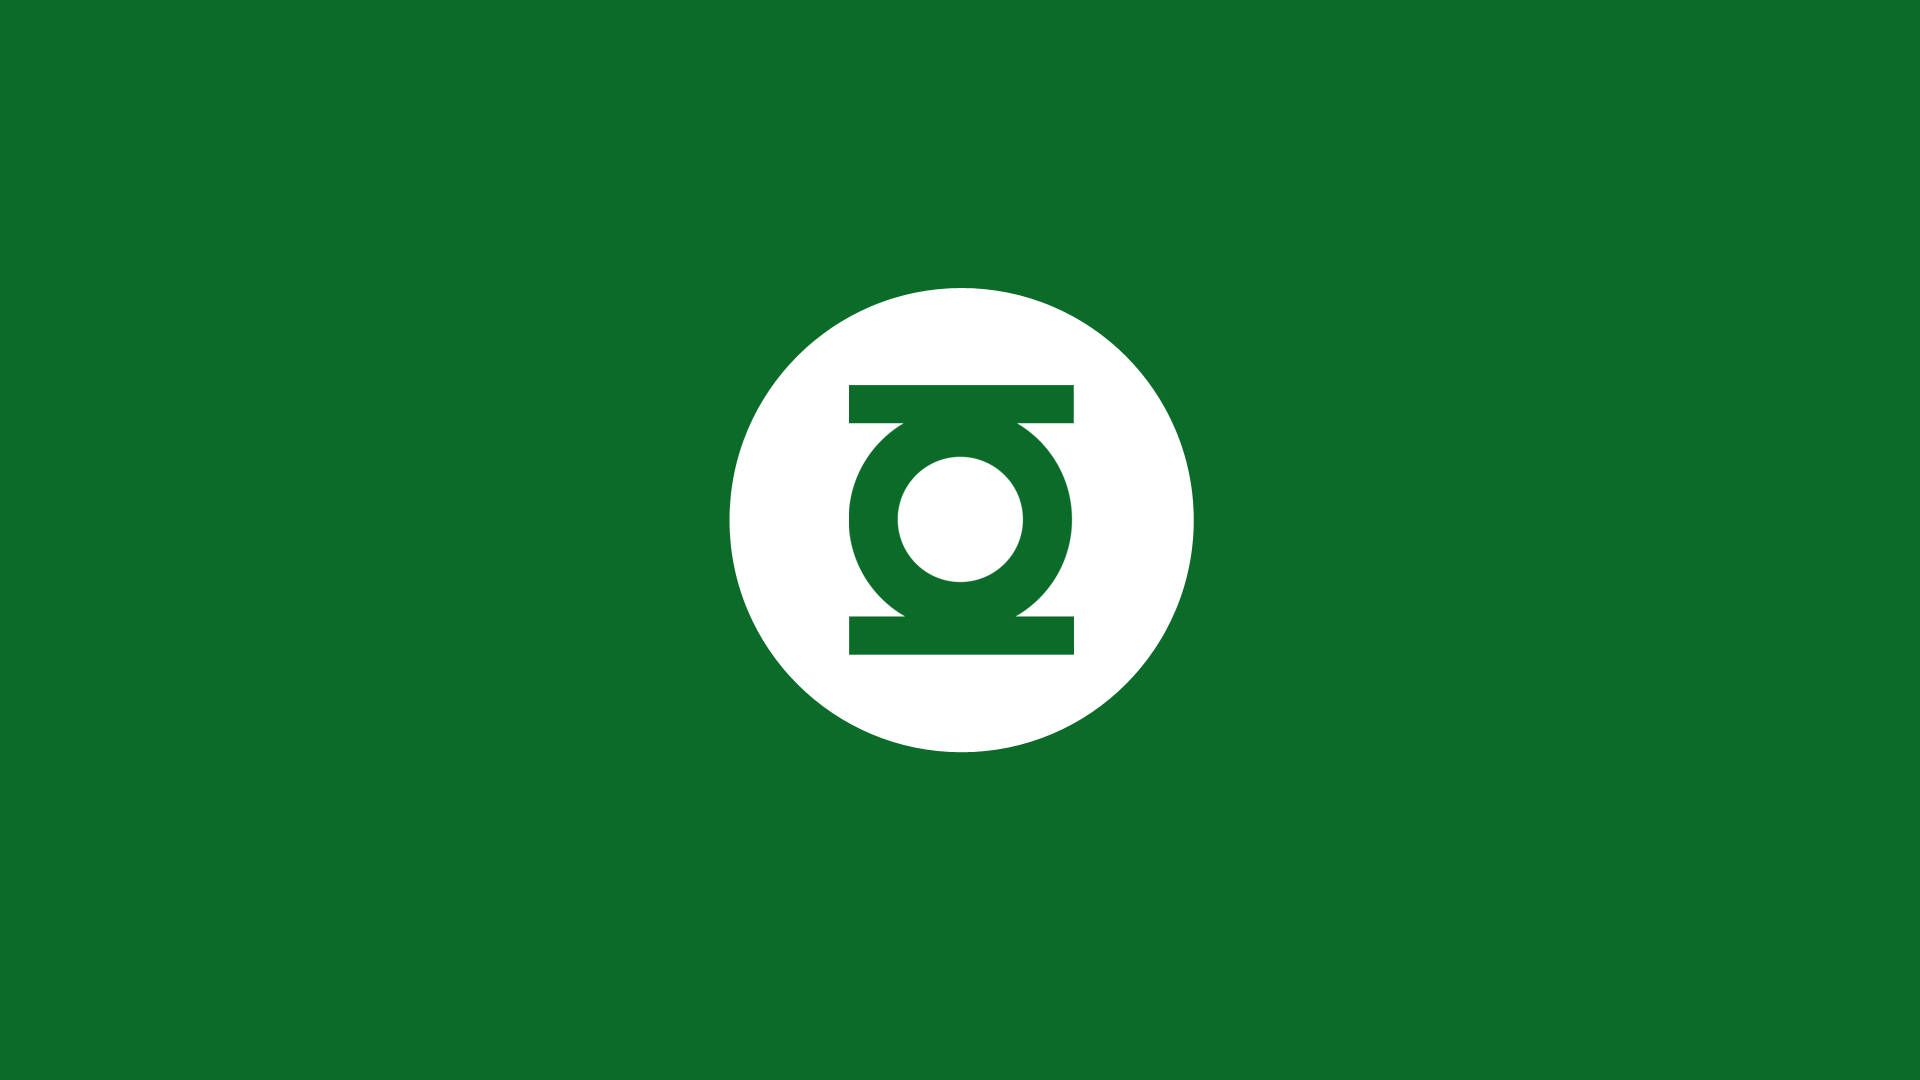 Minimalist Green Lantern Logo Background